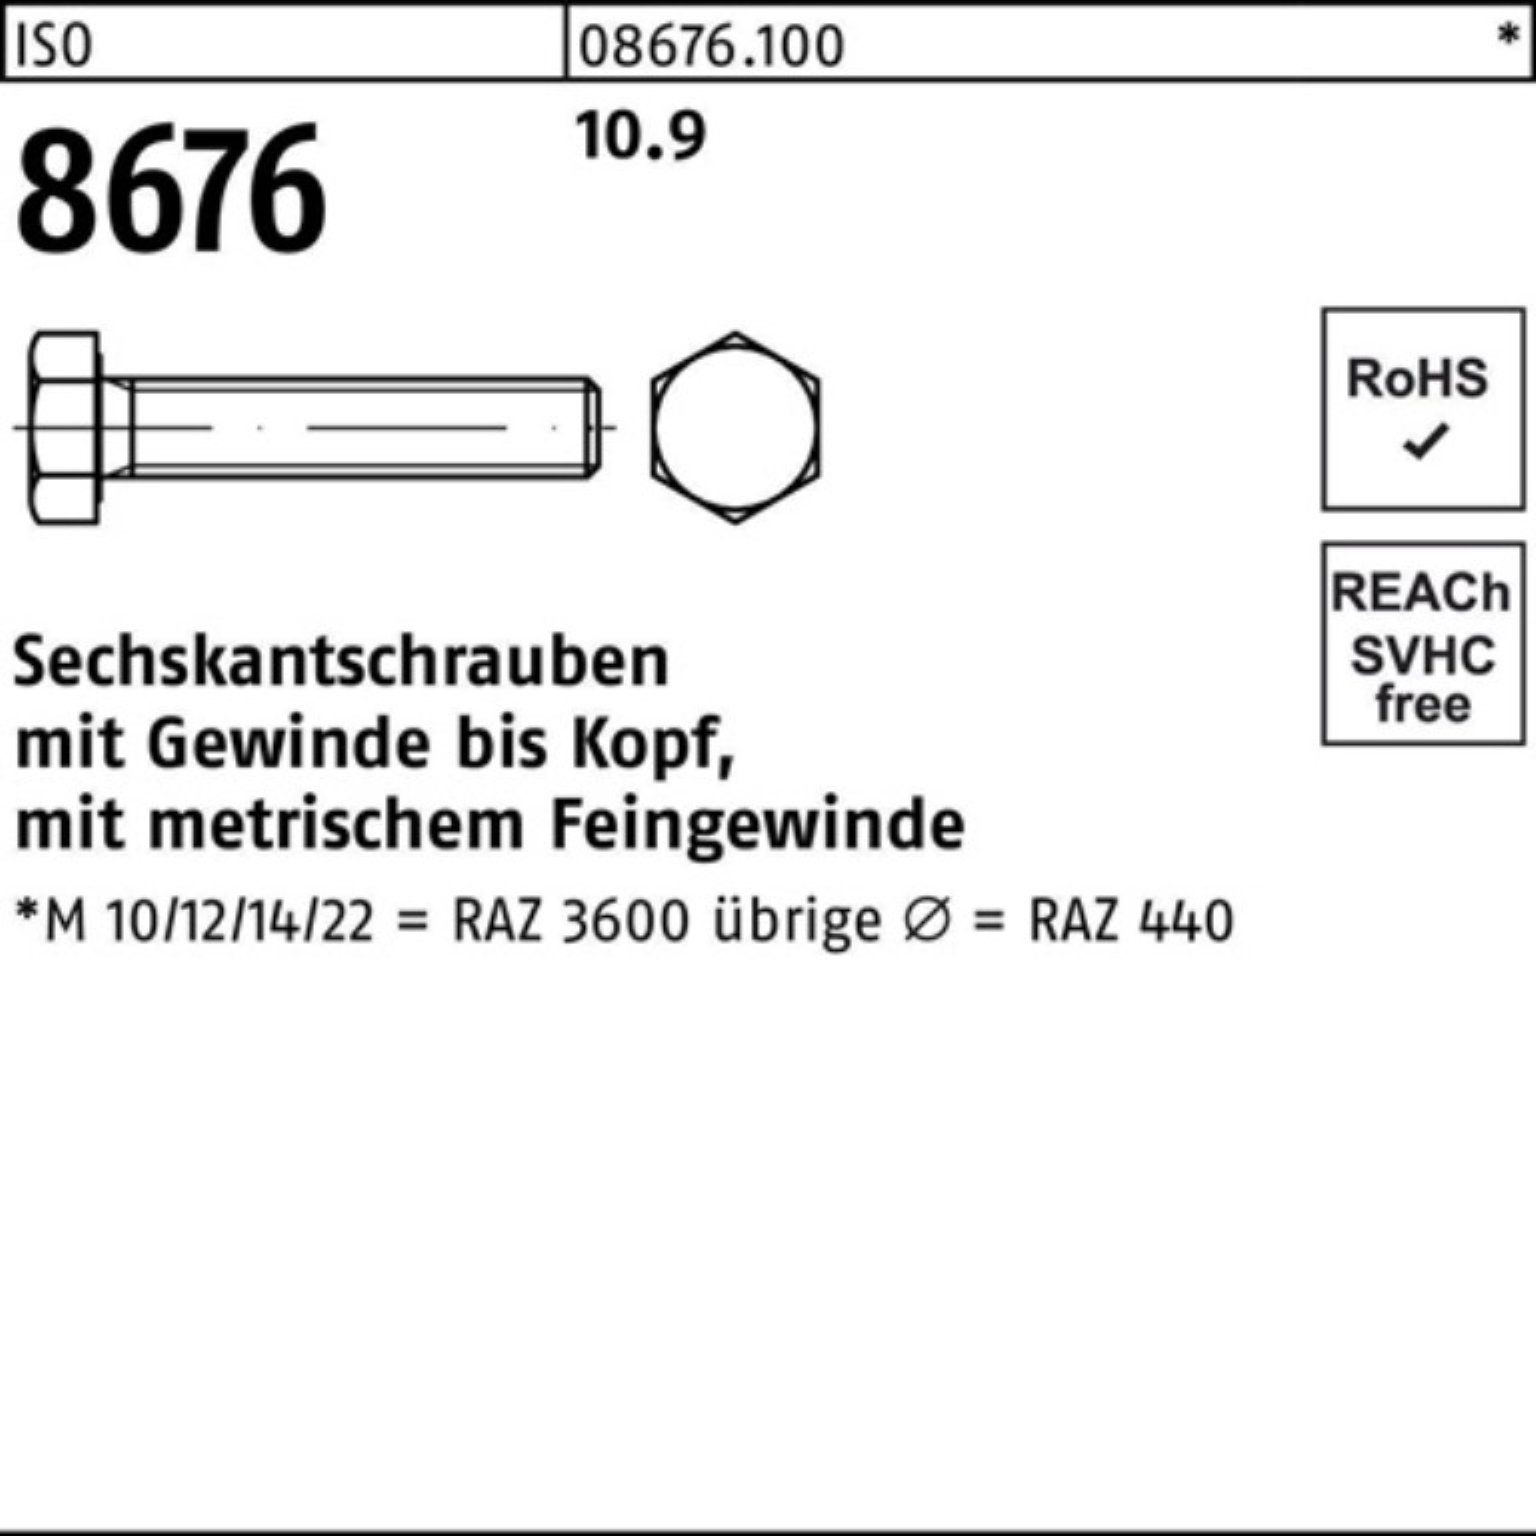 Reyher Sechskantschraube 200er Pack Sechskantschraube VG 80 8676 ISO ISO 200 10.9 Stück M8x1x